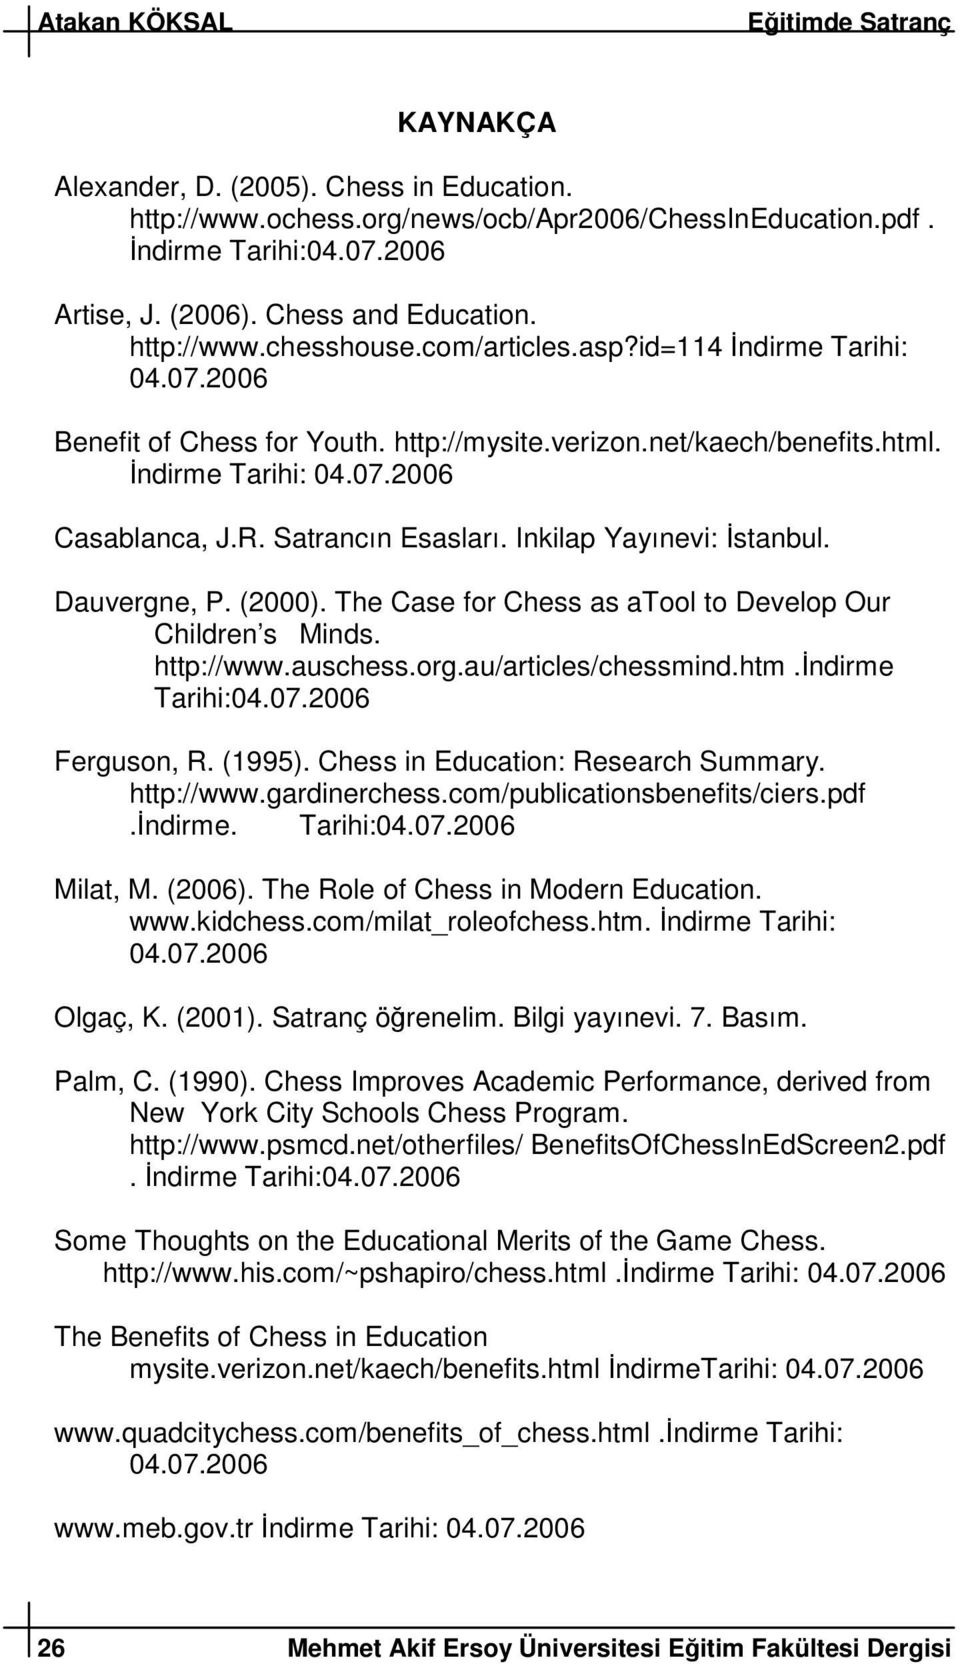 Satrancın Esasları. Inkilap Yayınevi: stanbul. Dauvergne, P. (2000). The Case for Chess as atool to Develop Our Children s Minds. http://www.auschess.org.au/articles/chessmind.htm.ndirme Tarihi:04.07.